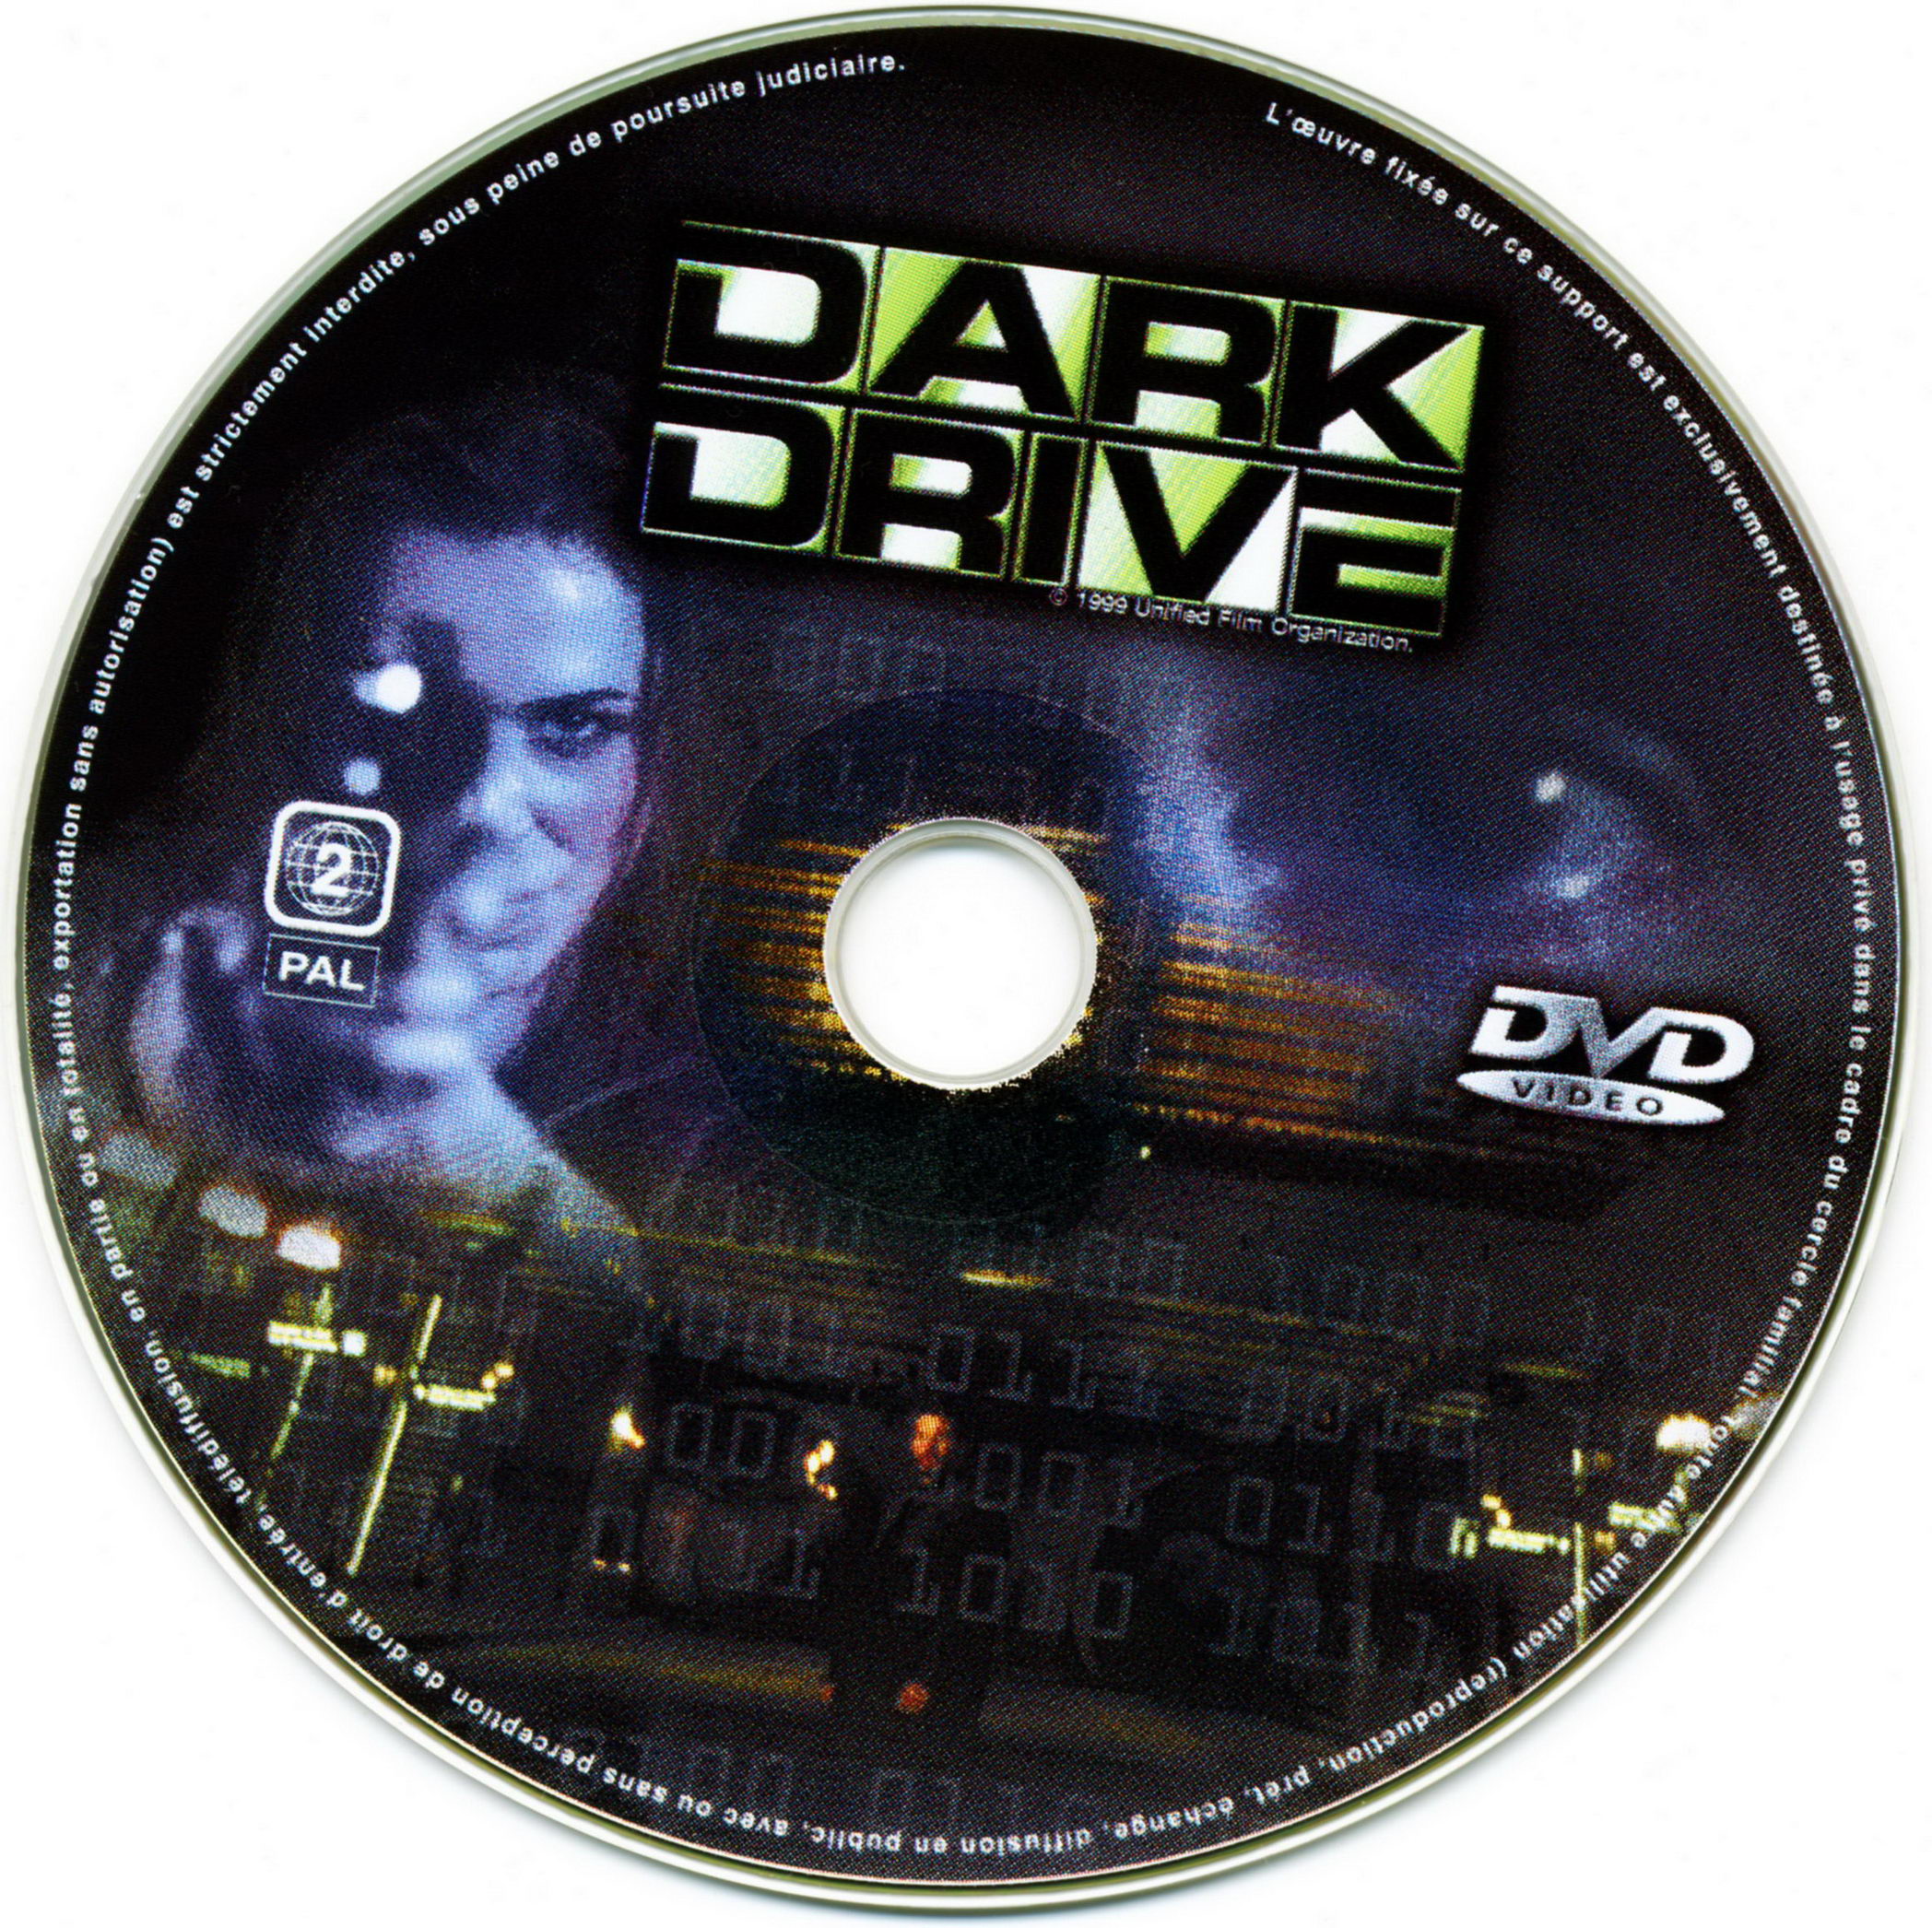 Dark drive